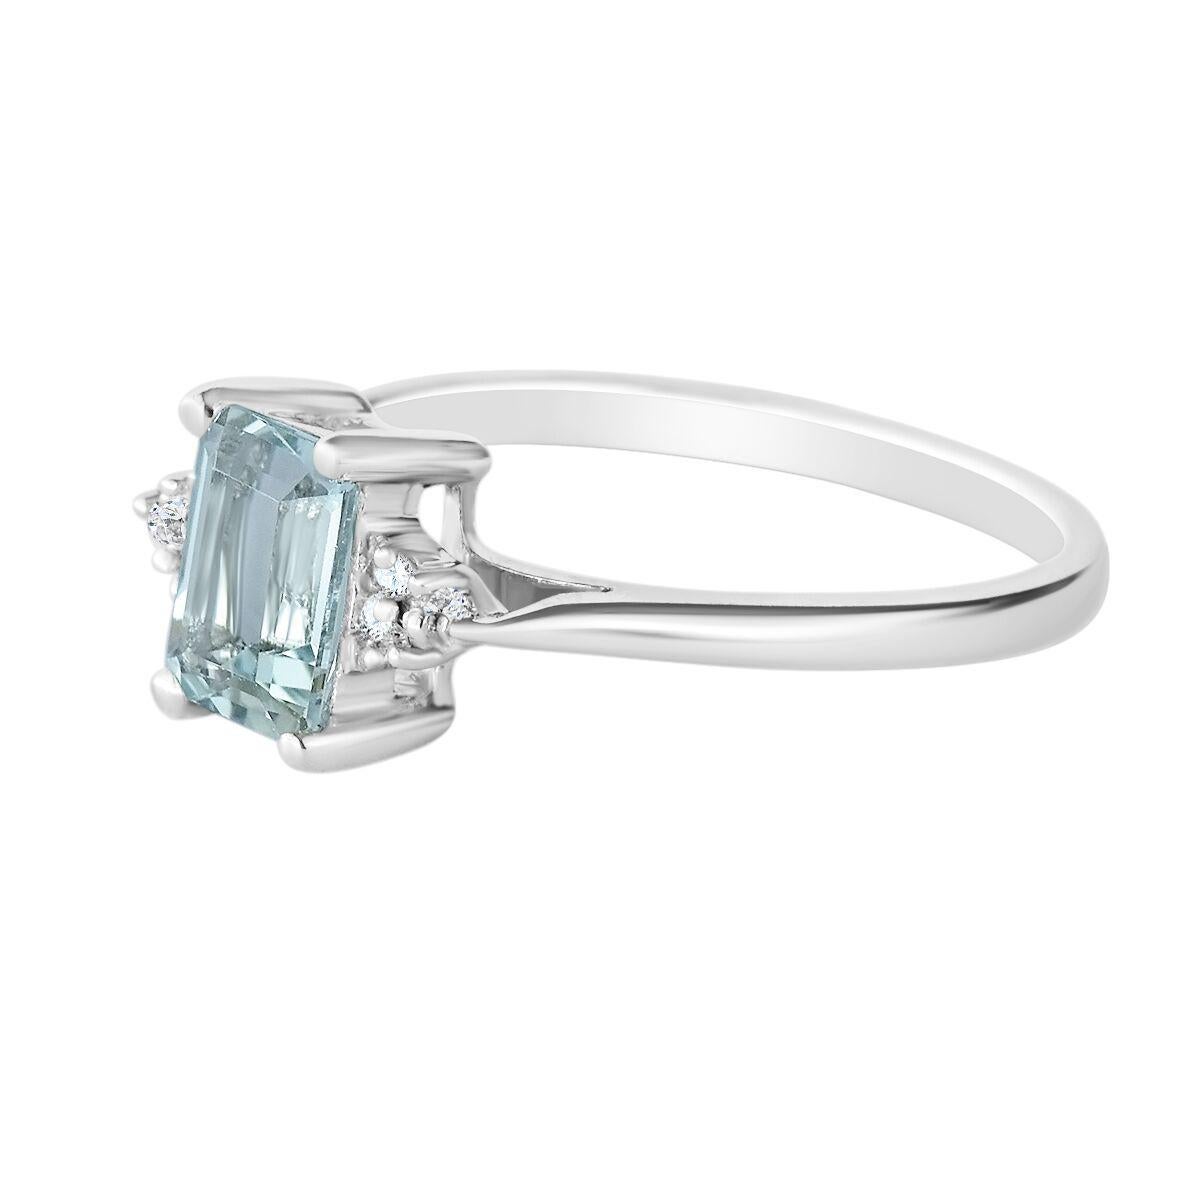 0.90 Carat Natural Emerald Cut Aquamarine Ring Solid White Gold with 6 Diamonds 1